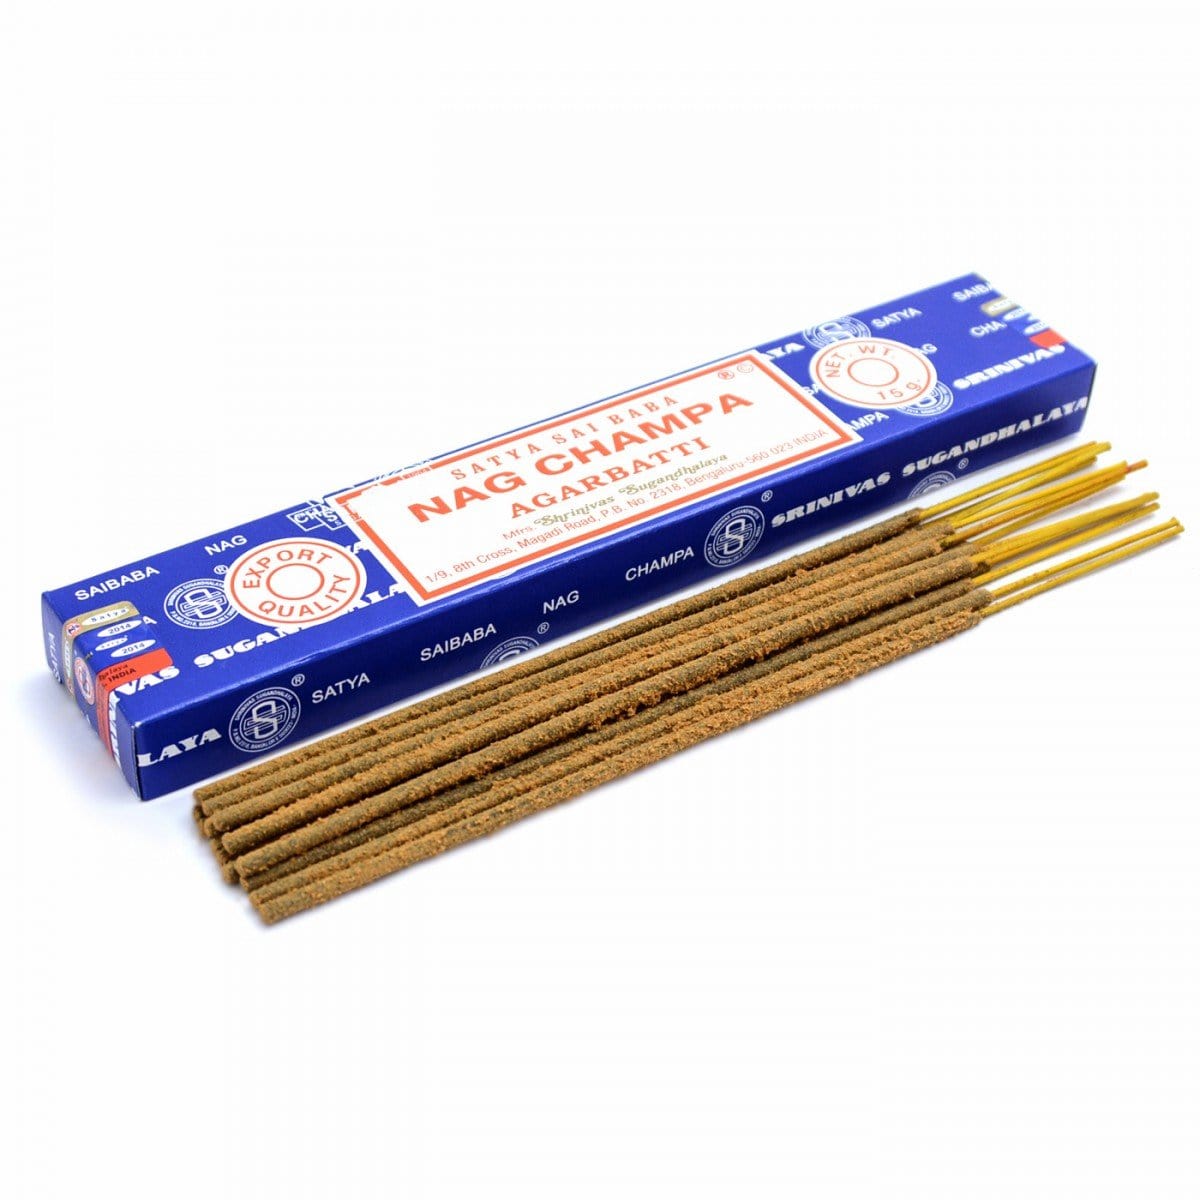 Nag Champa Satya Sai Baba® Incense Sticks 40g